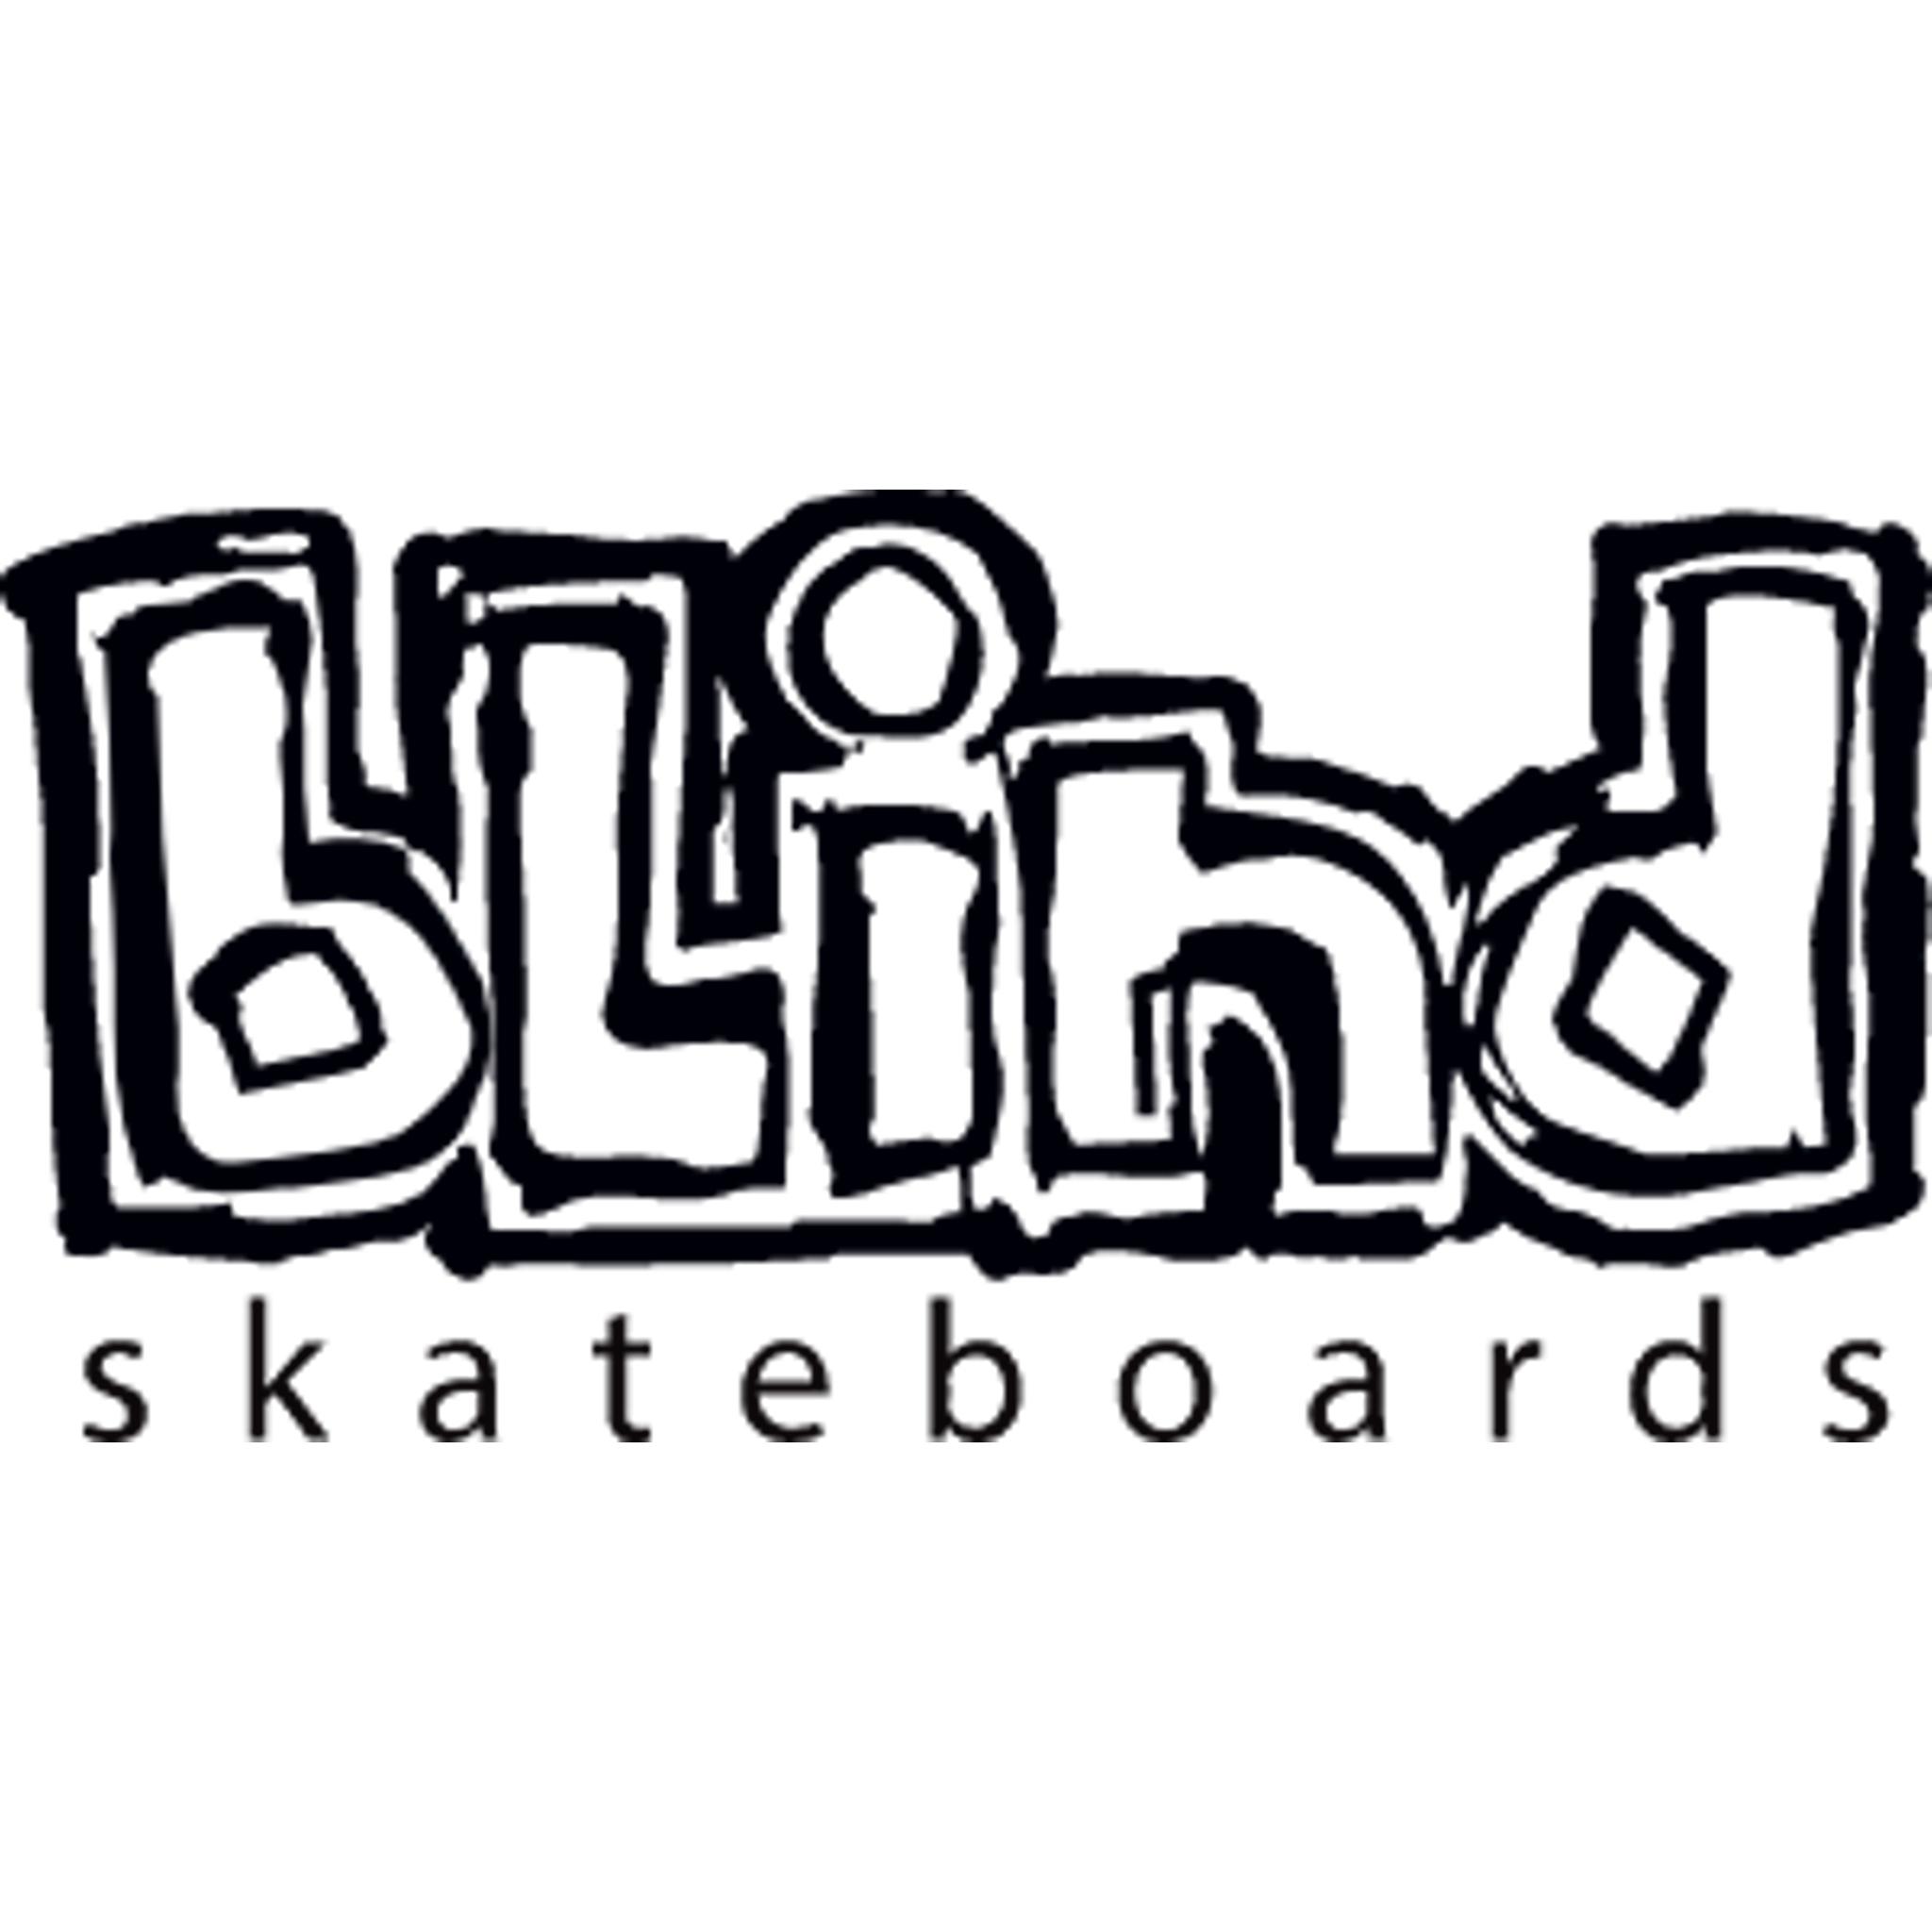 blind skateboards